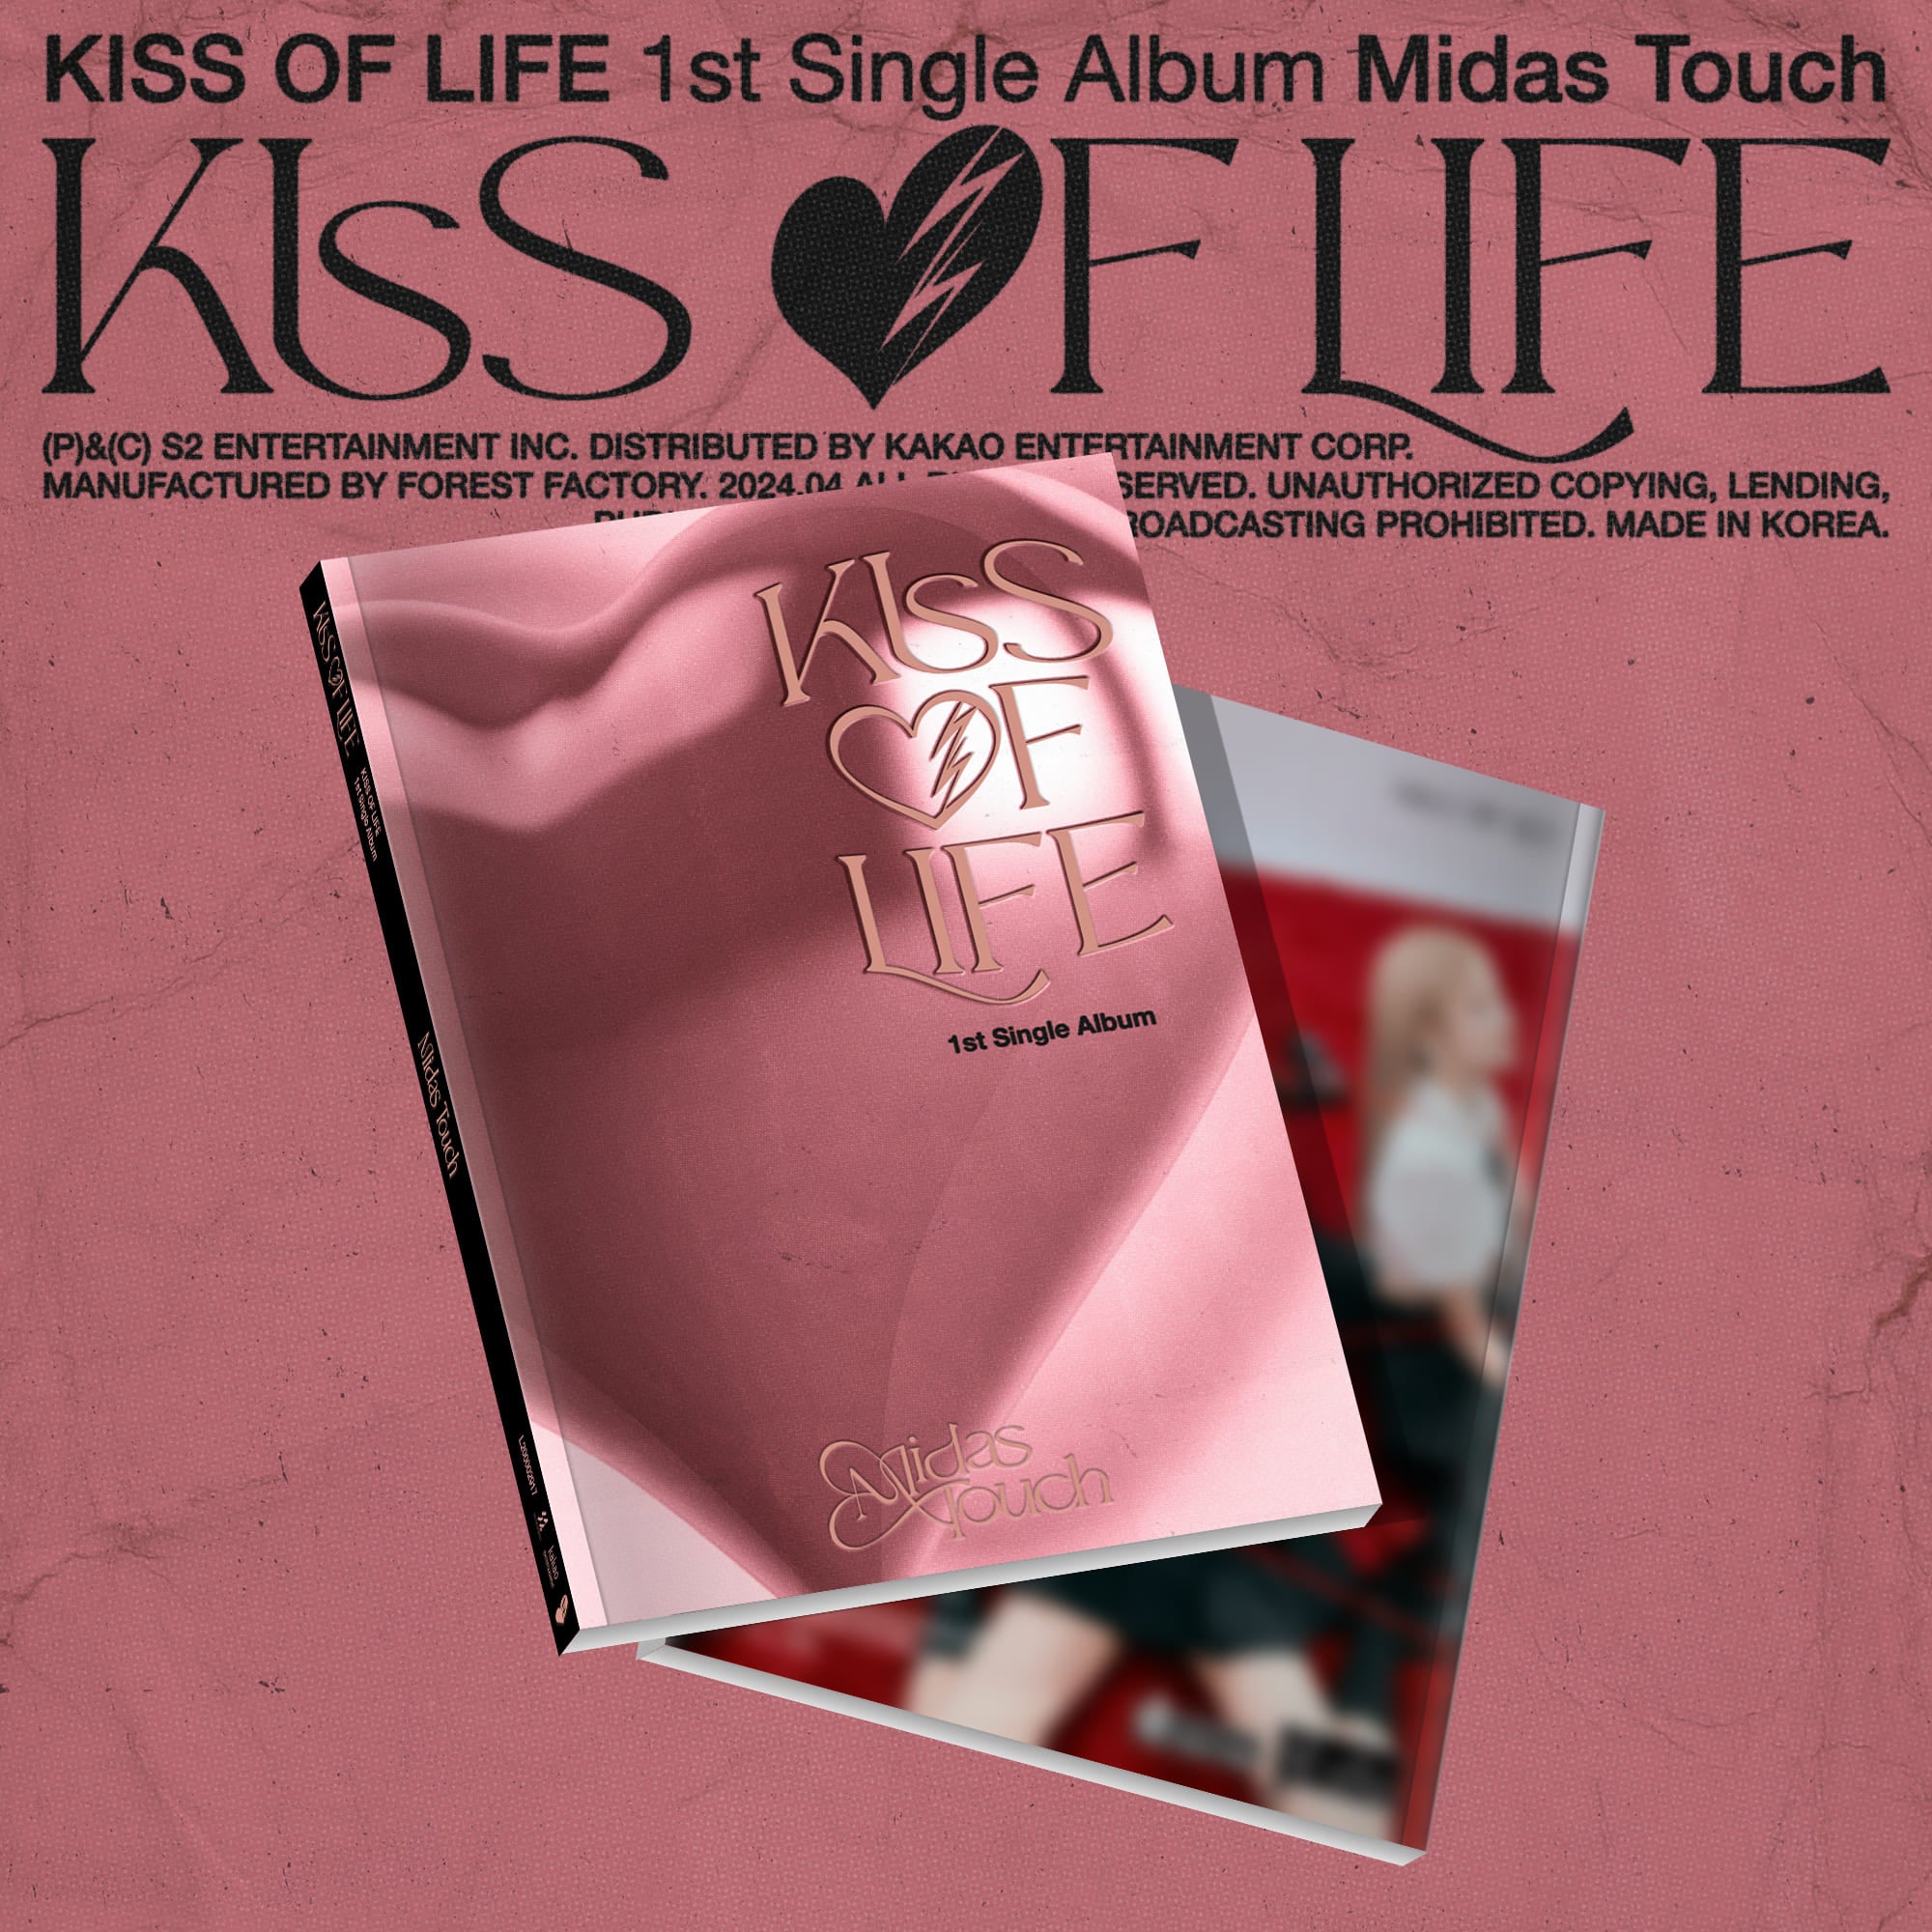 KISS OF LIFE 1st Single Album Midas Touch